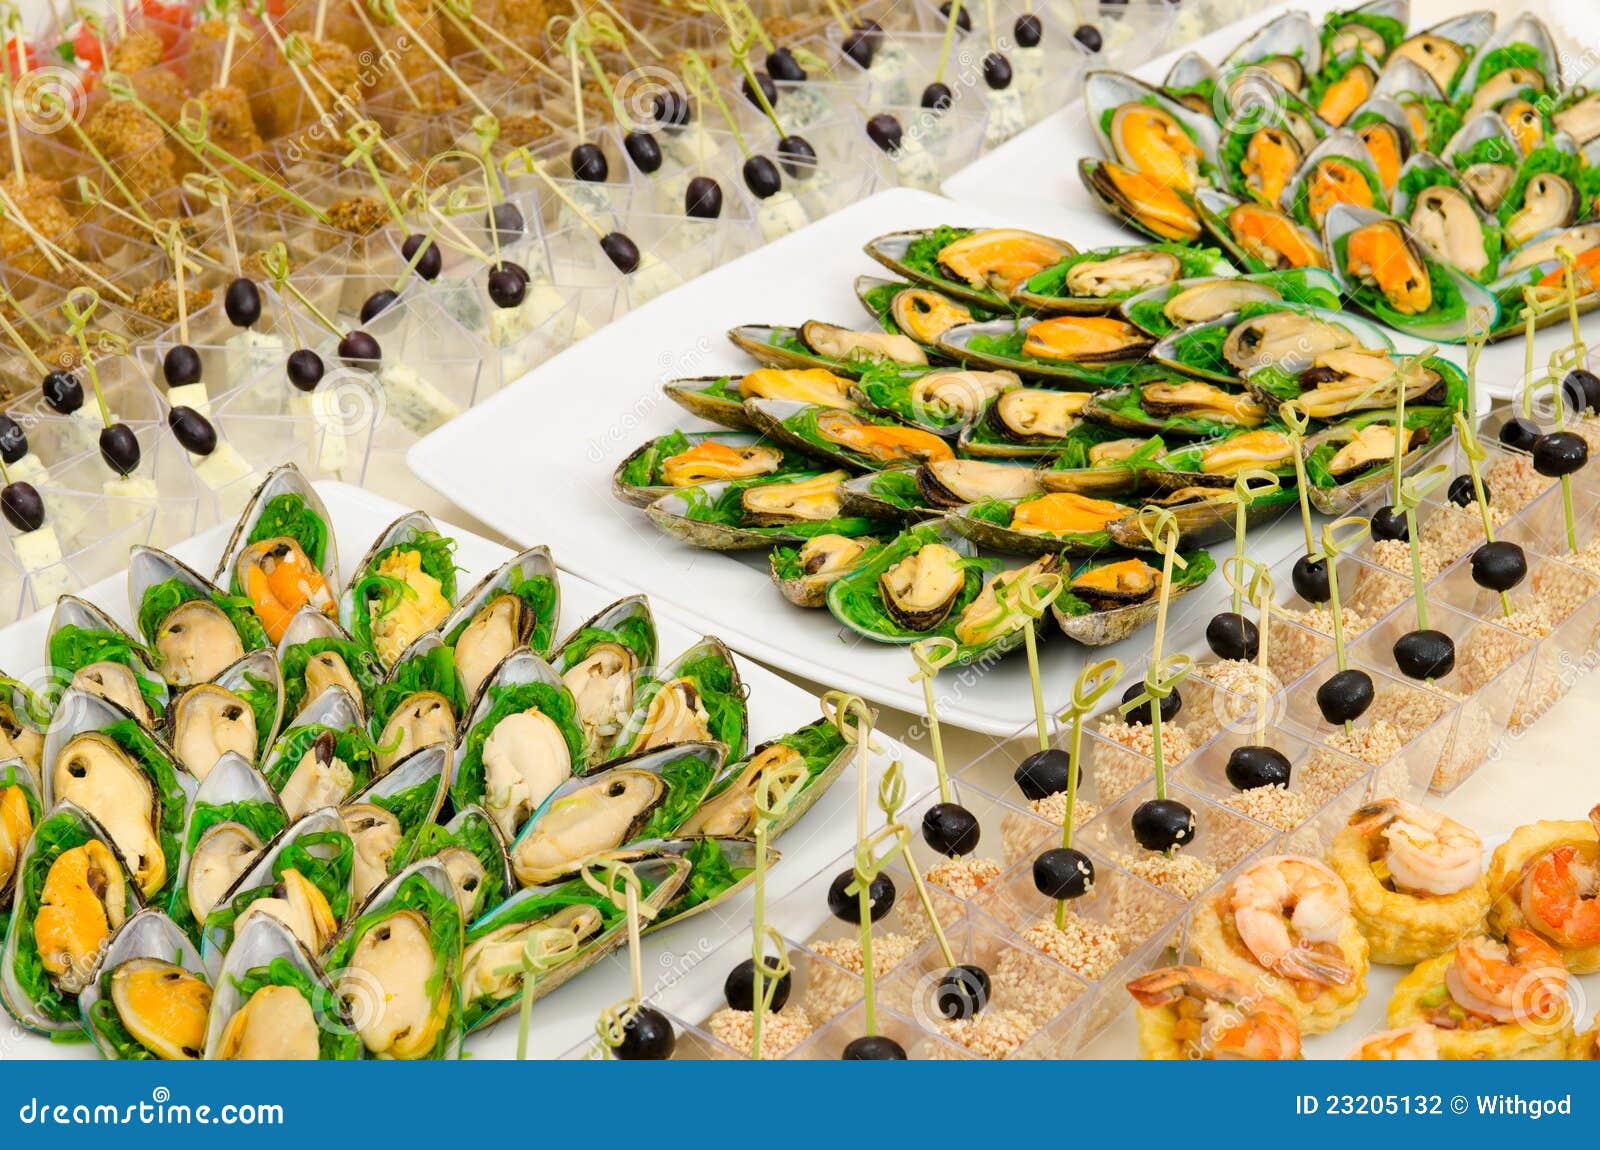 Seafood buffet stock photo. Image of canape, fish, prawn - 23205132